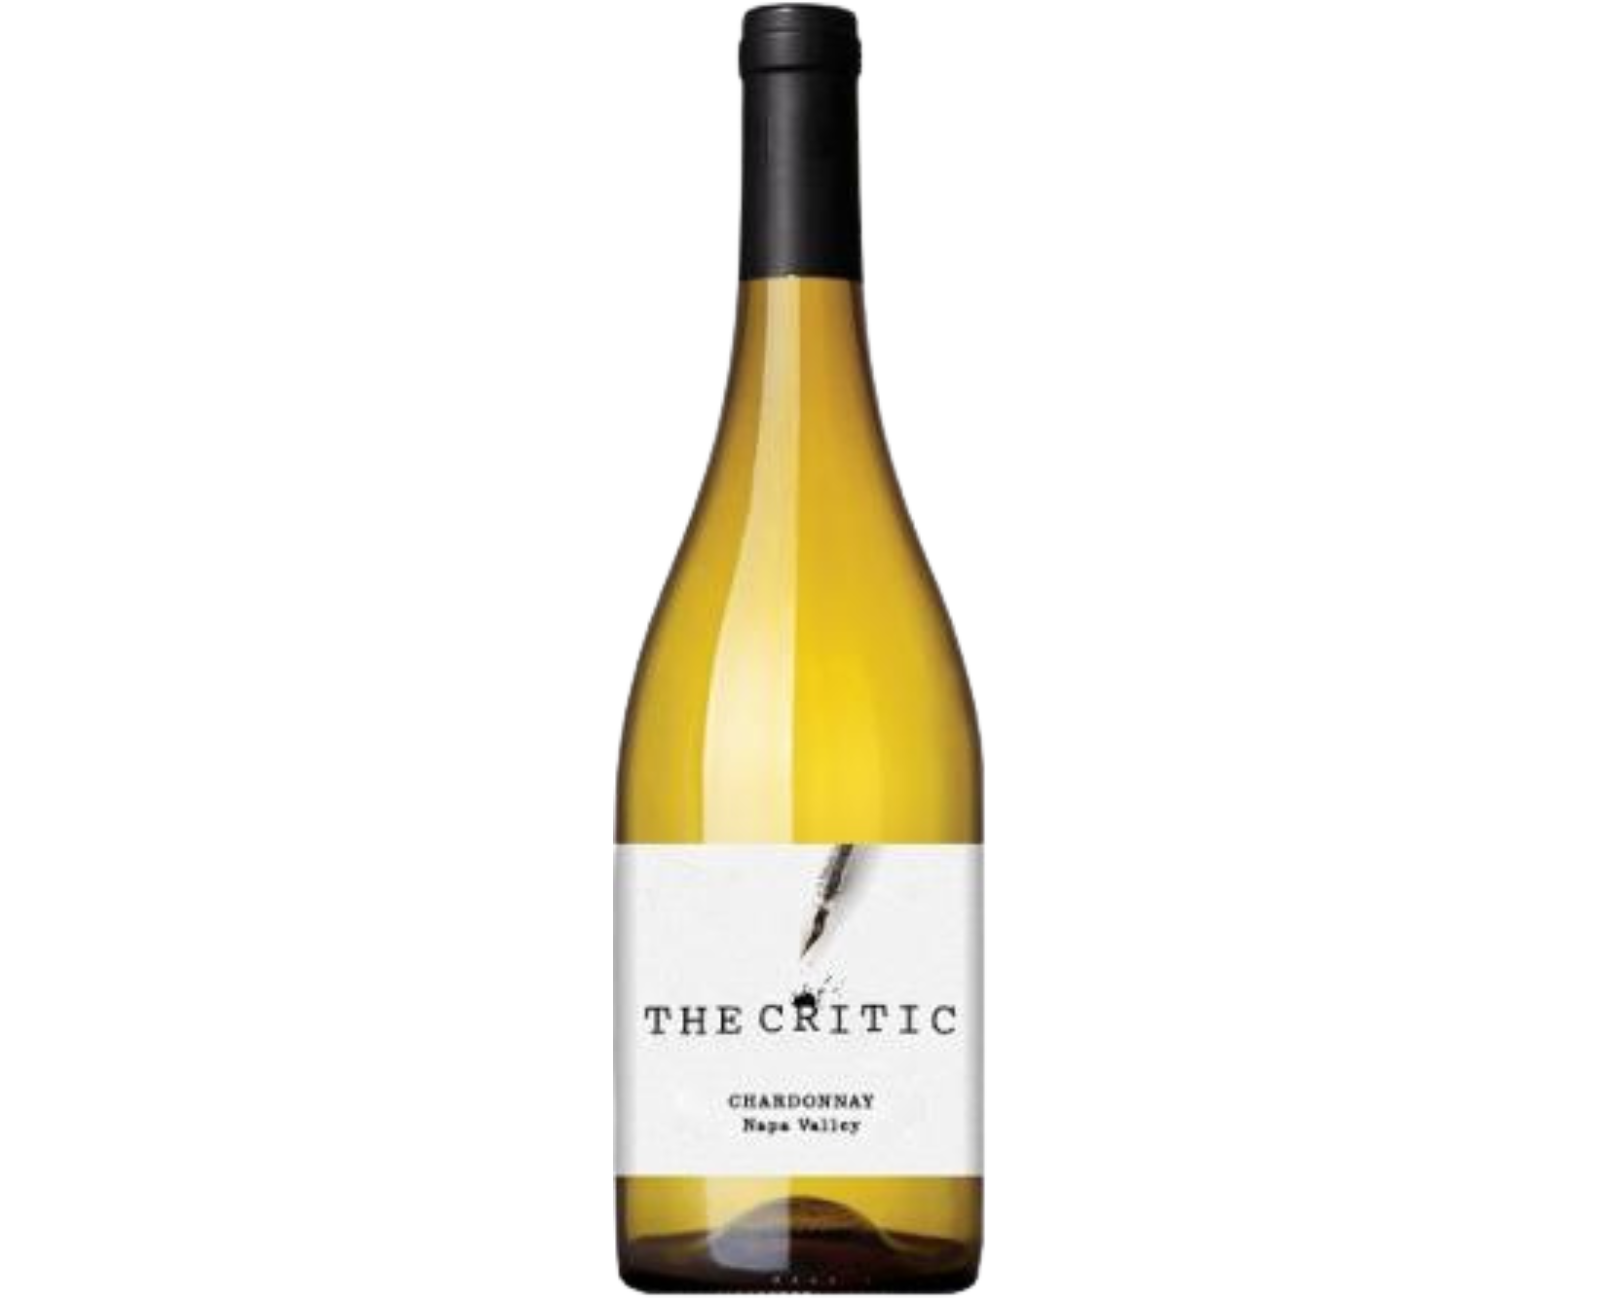 The Critic 2020 Chardonnay, Napa Valley